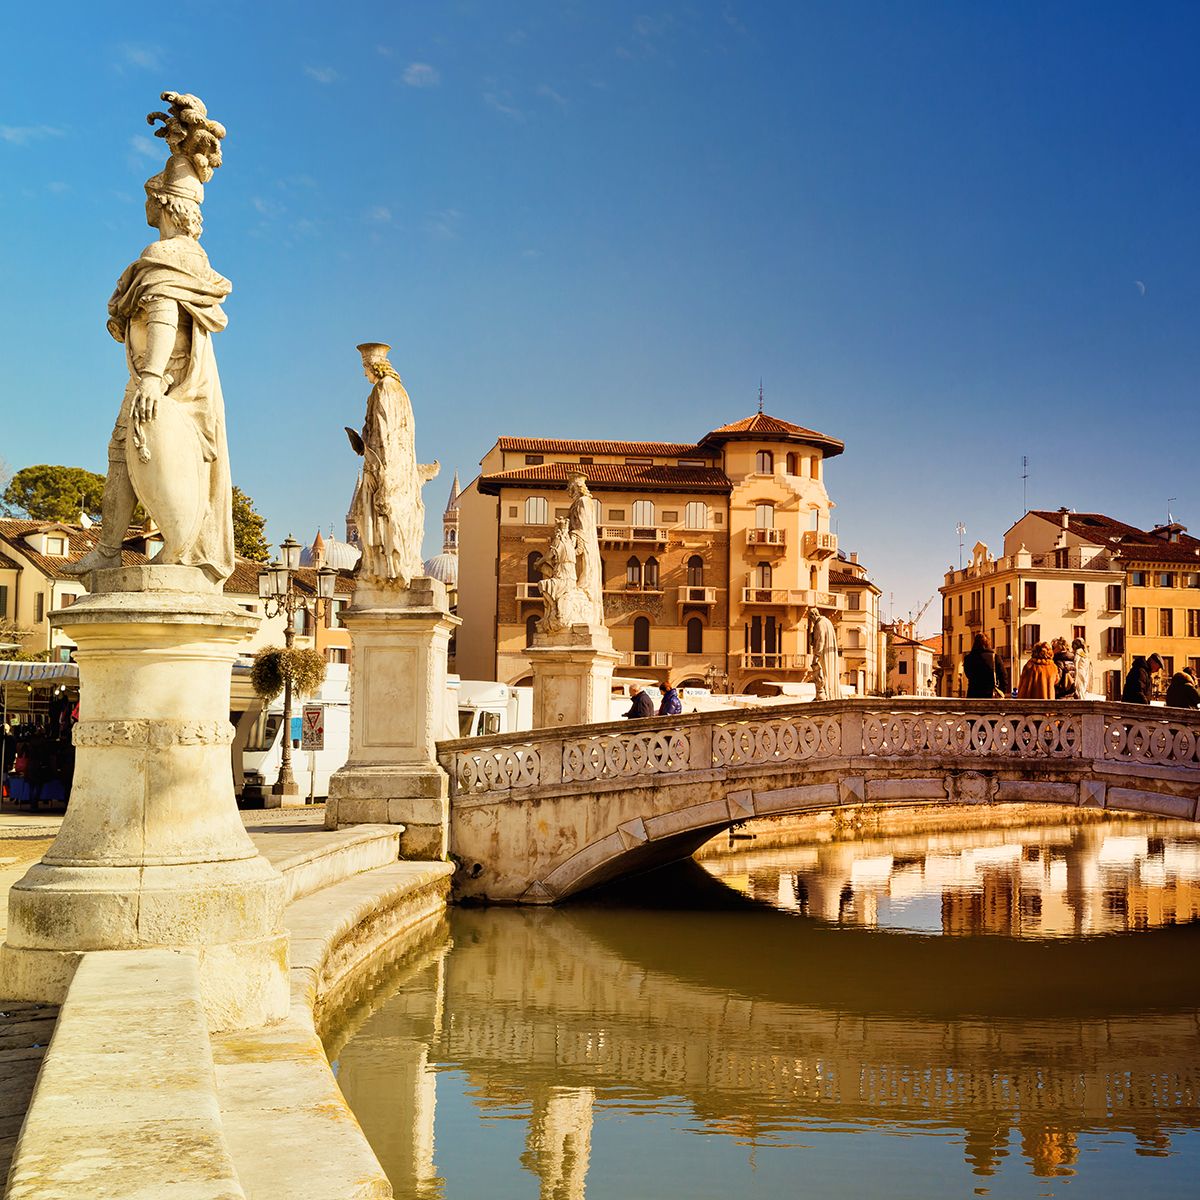 Veneto is an adorable European town that you can honeymoon in